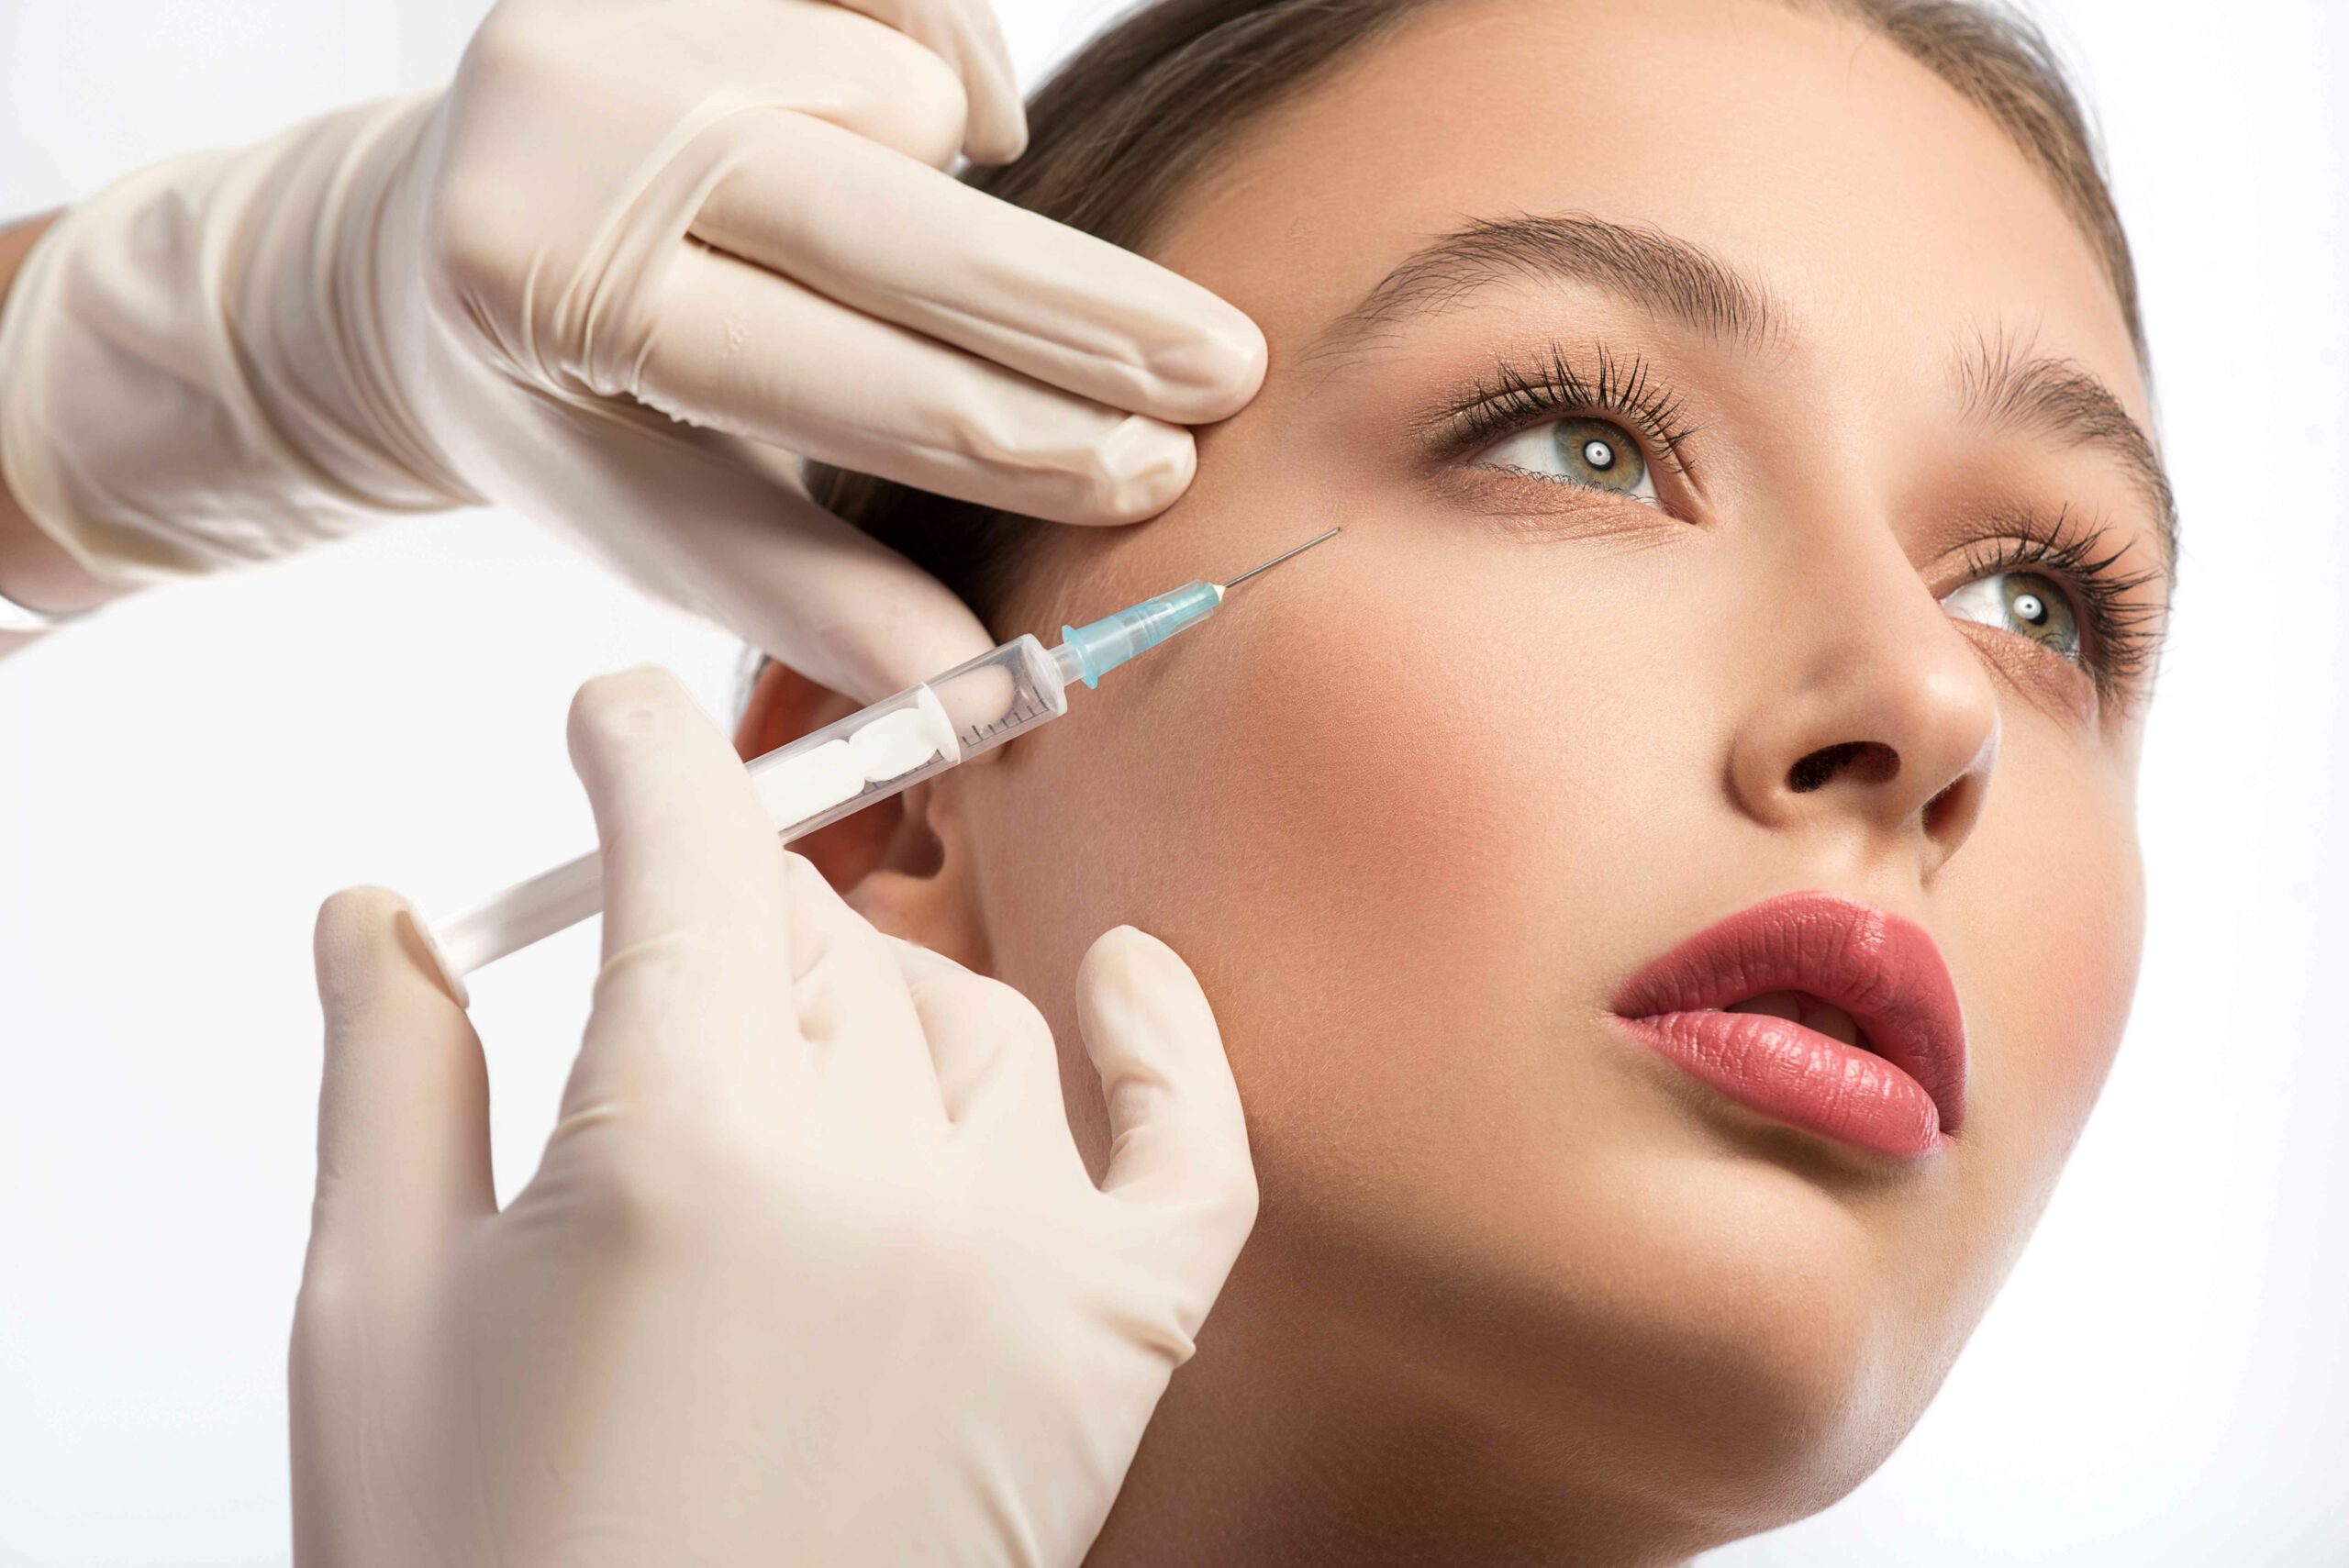 A Pretty Woman Getting Injection on near eyes | Botox | Jeuveau | Daxxify | Mirror Mirror Aesthetics and Wellness in Tucson, AZ